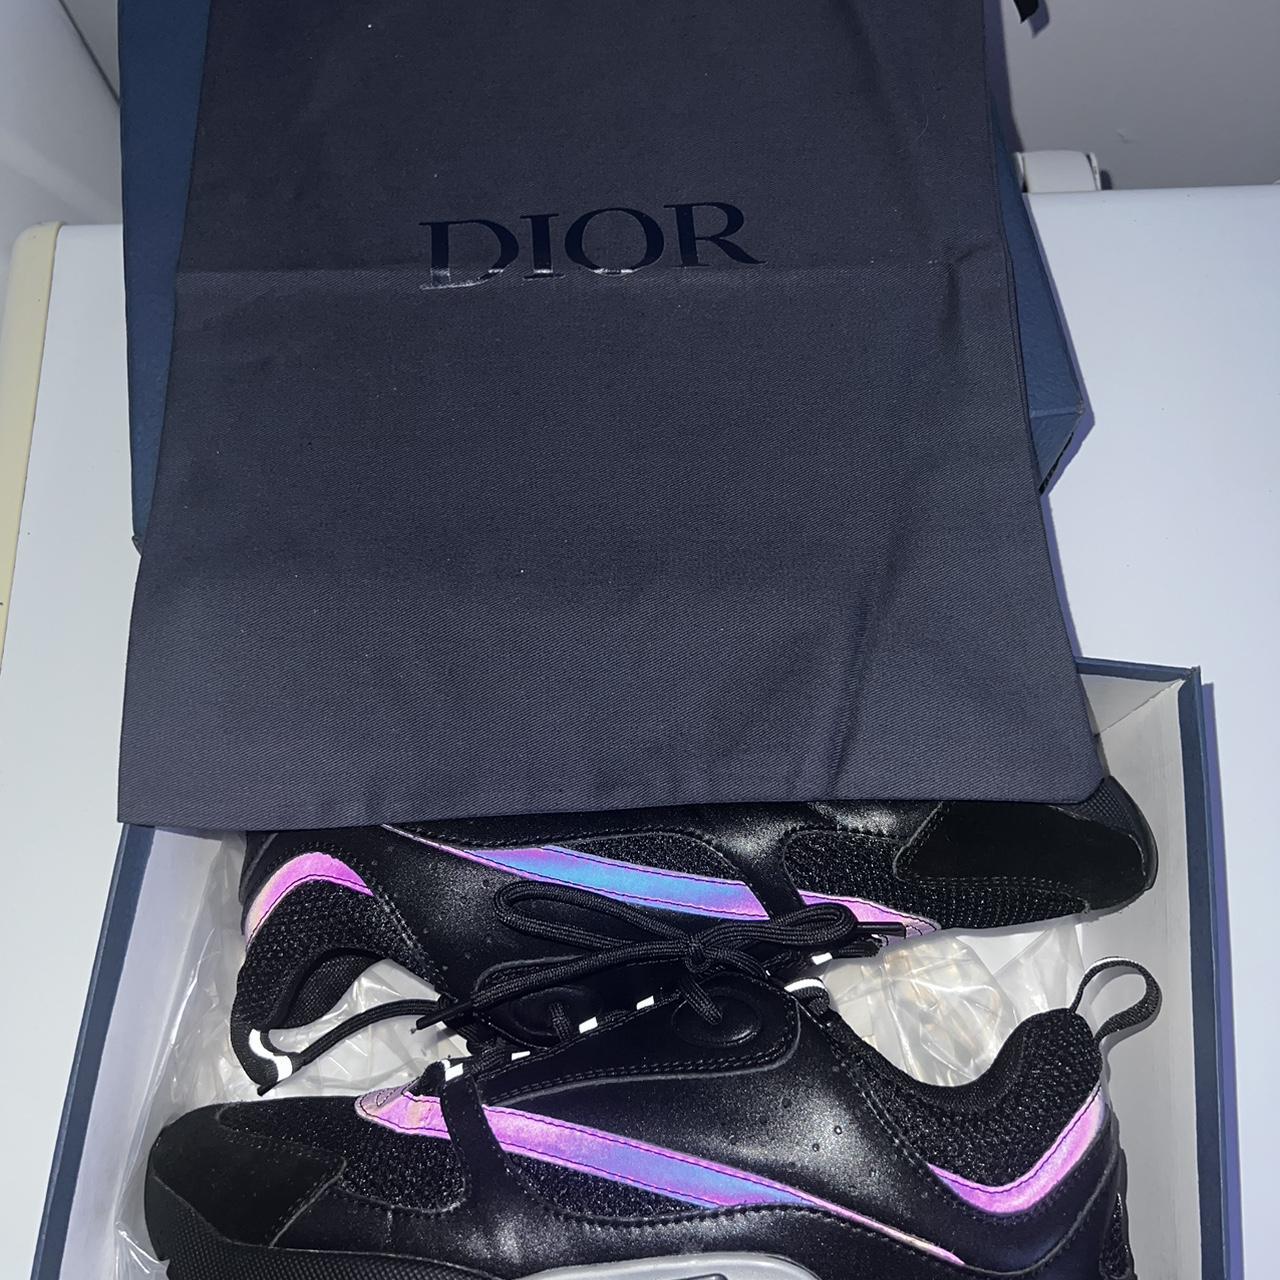 Dior b22 black reflective men's 9.5, quick shipping, - Depop